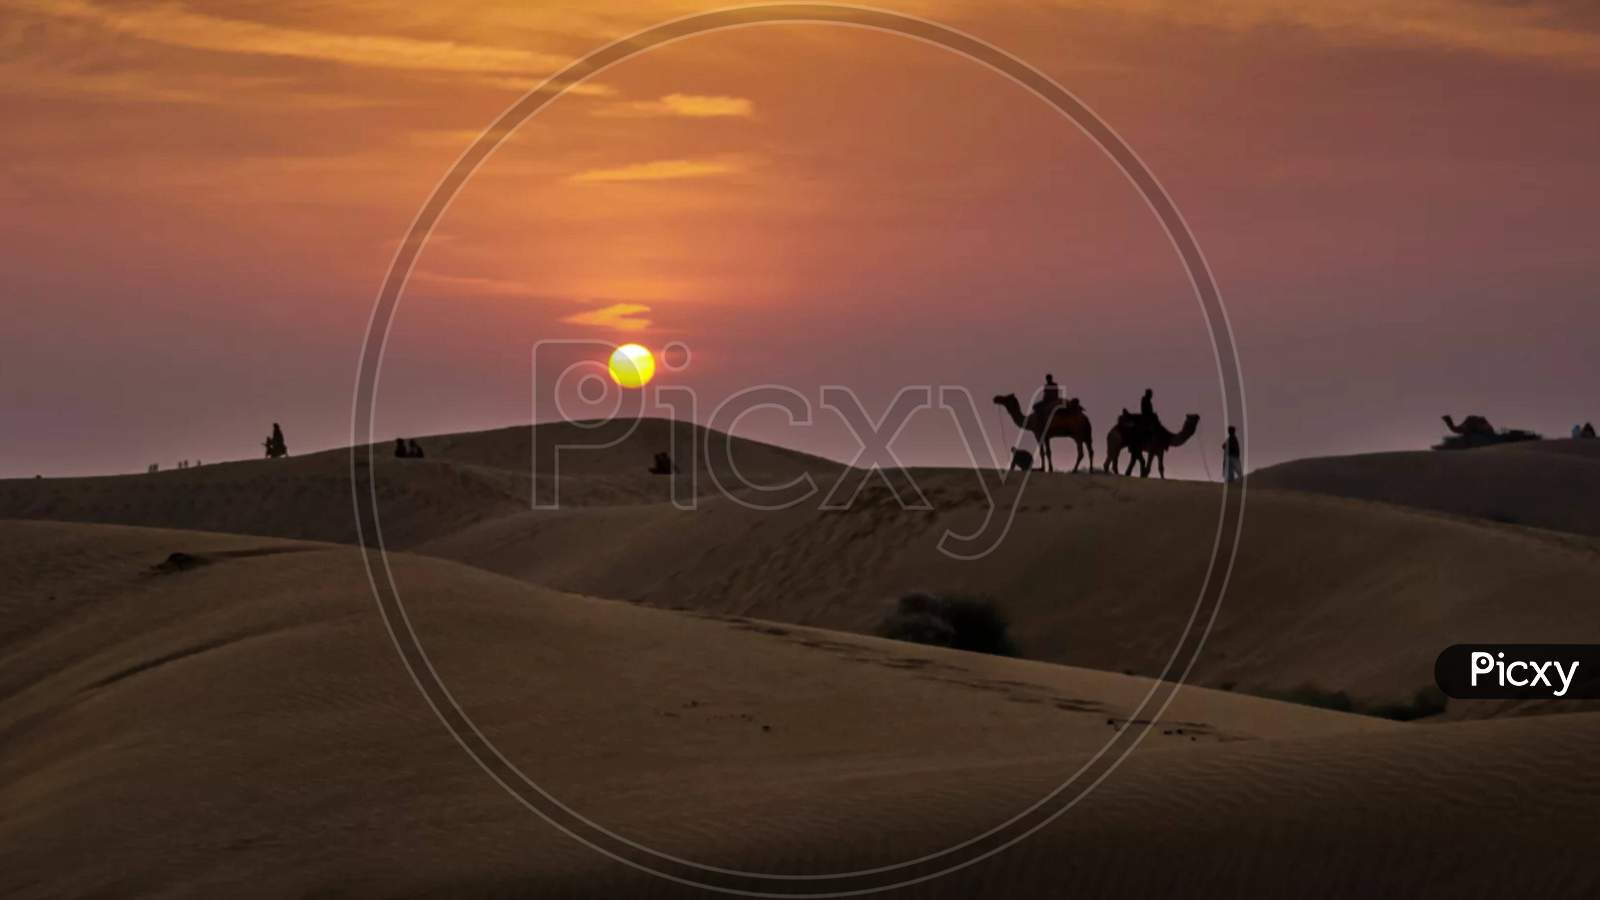 Sahara desert camel Ride at sunset